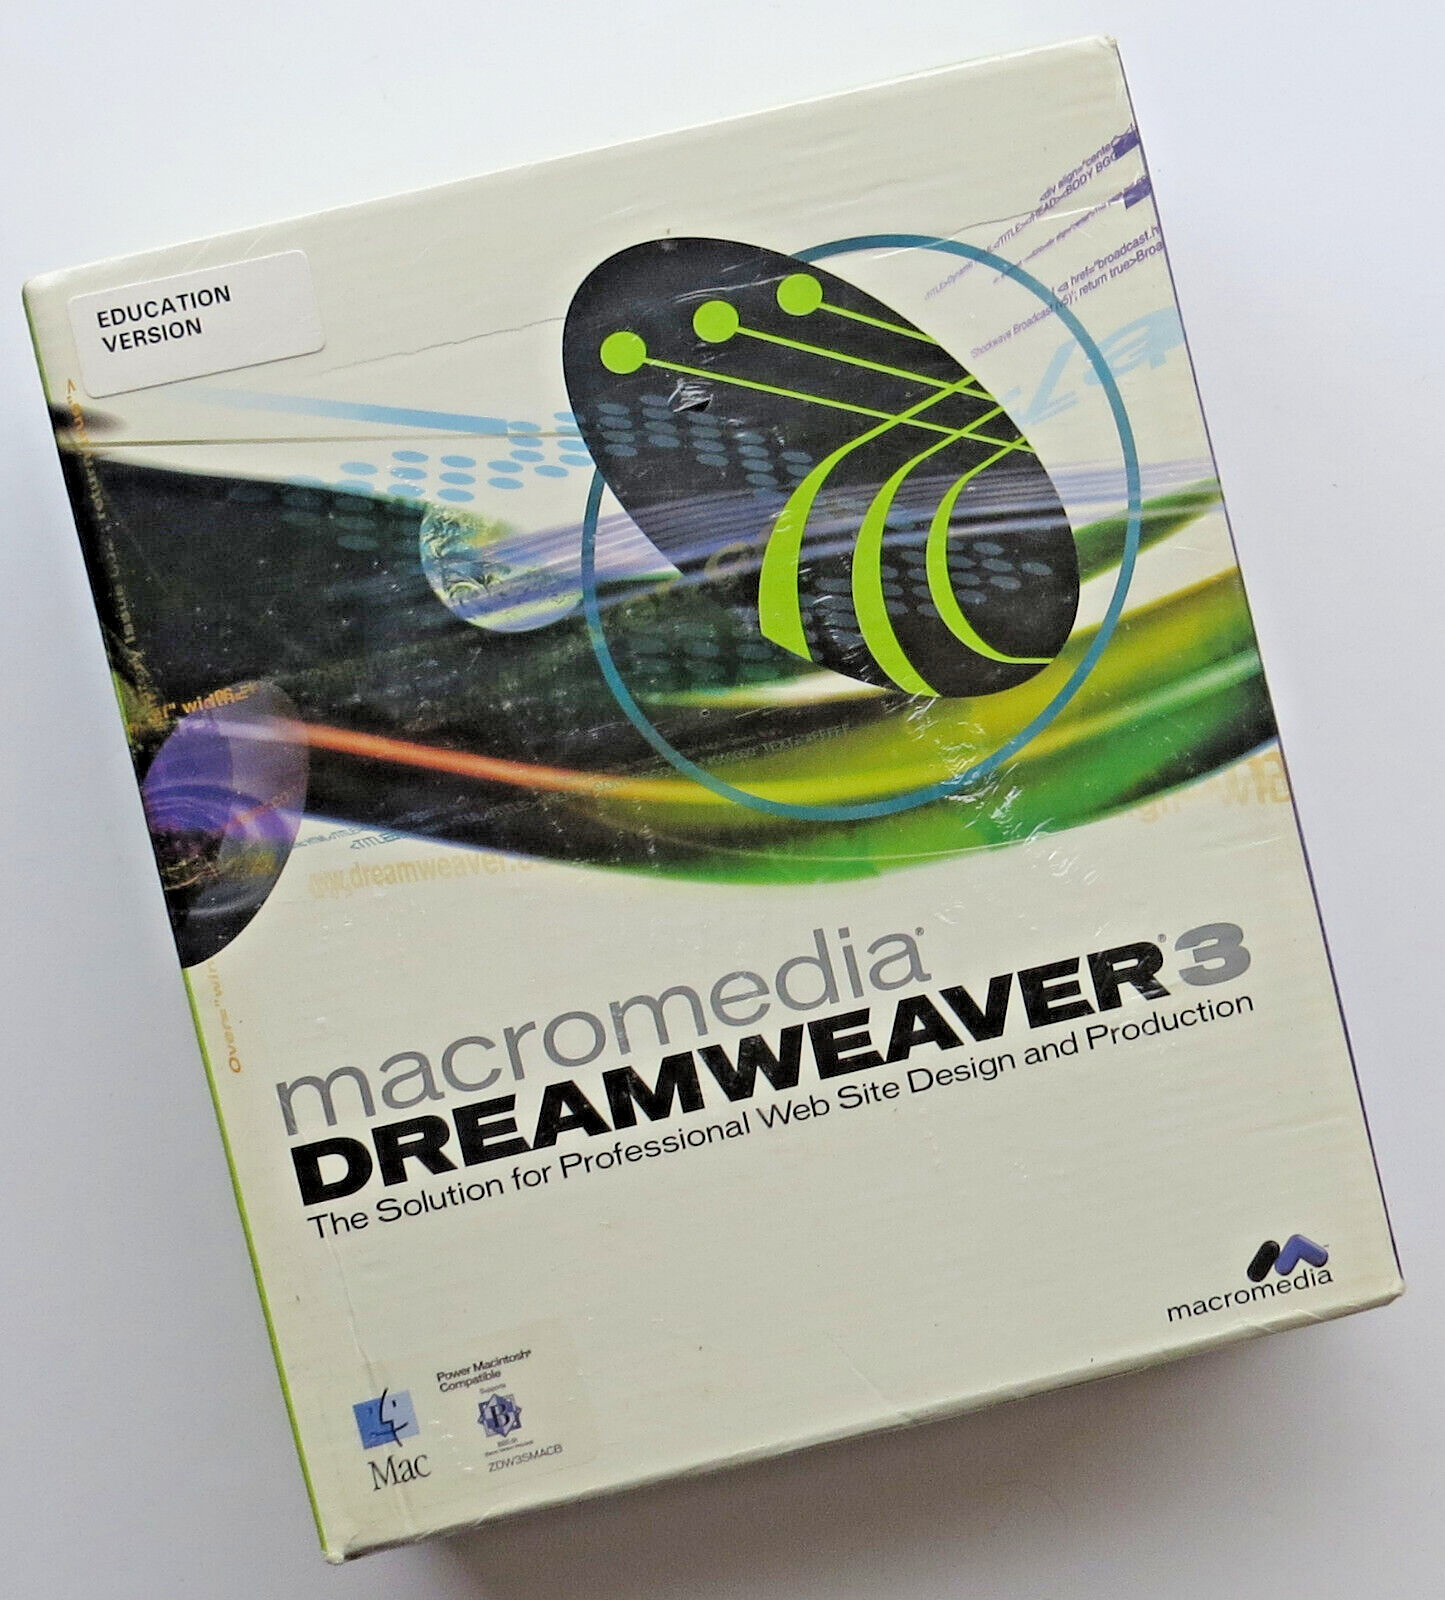 NOS Education Version MACROMEDIA DREAMWEAVER 3 Macintosh WEB Design WINDOWS Mac